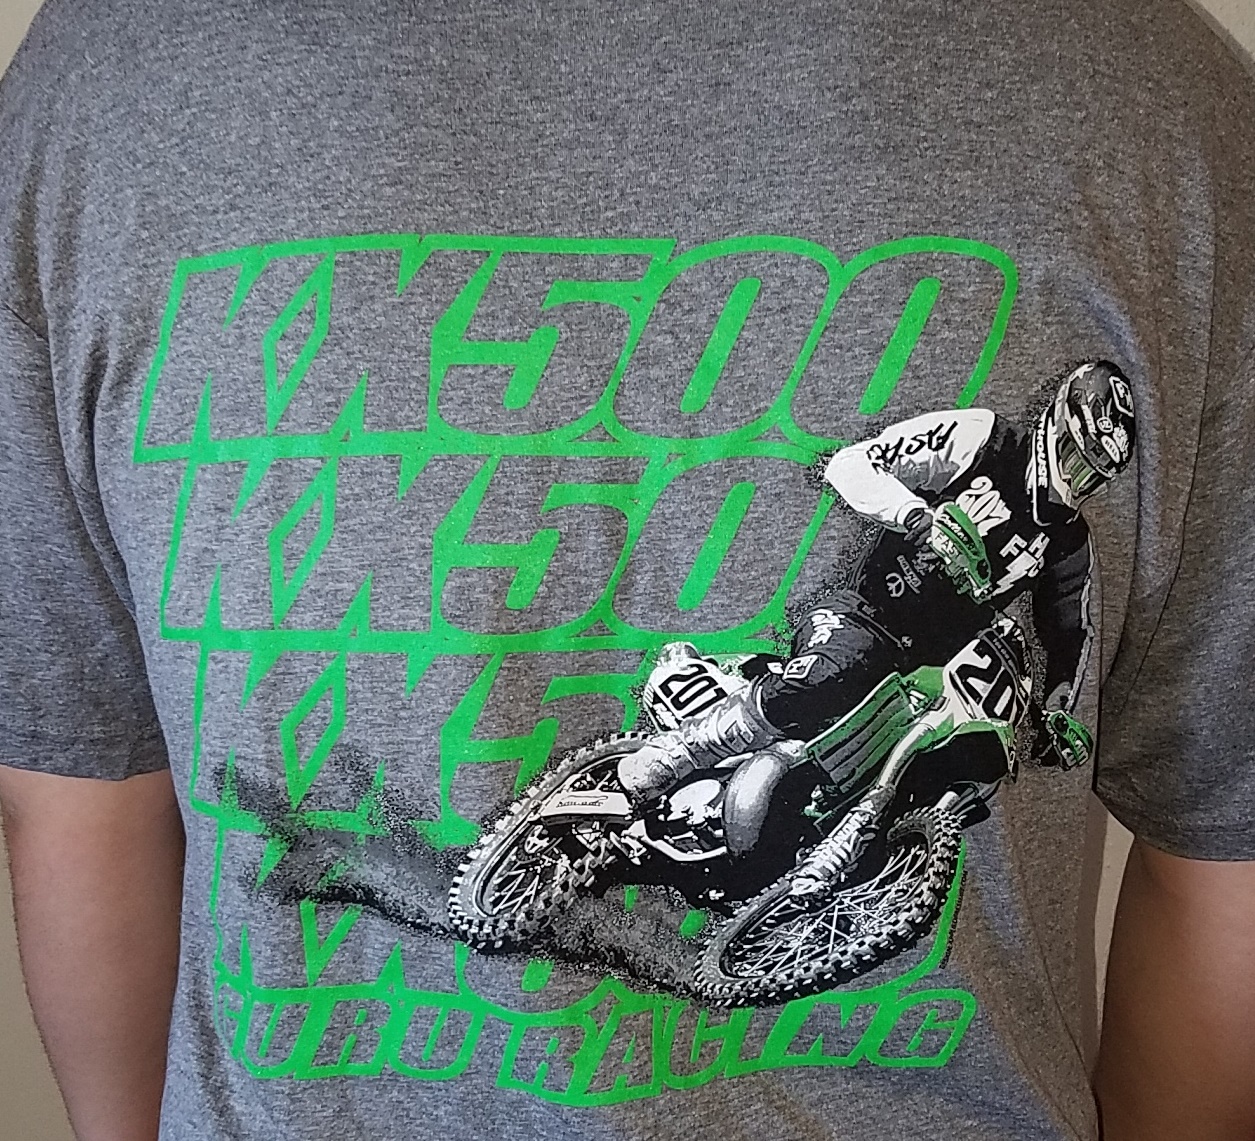 Sean Collier KX Guru Racing T-shirts 2.jpg